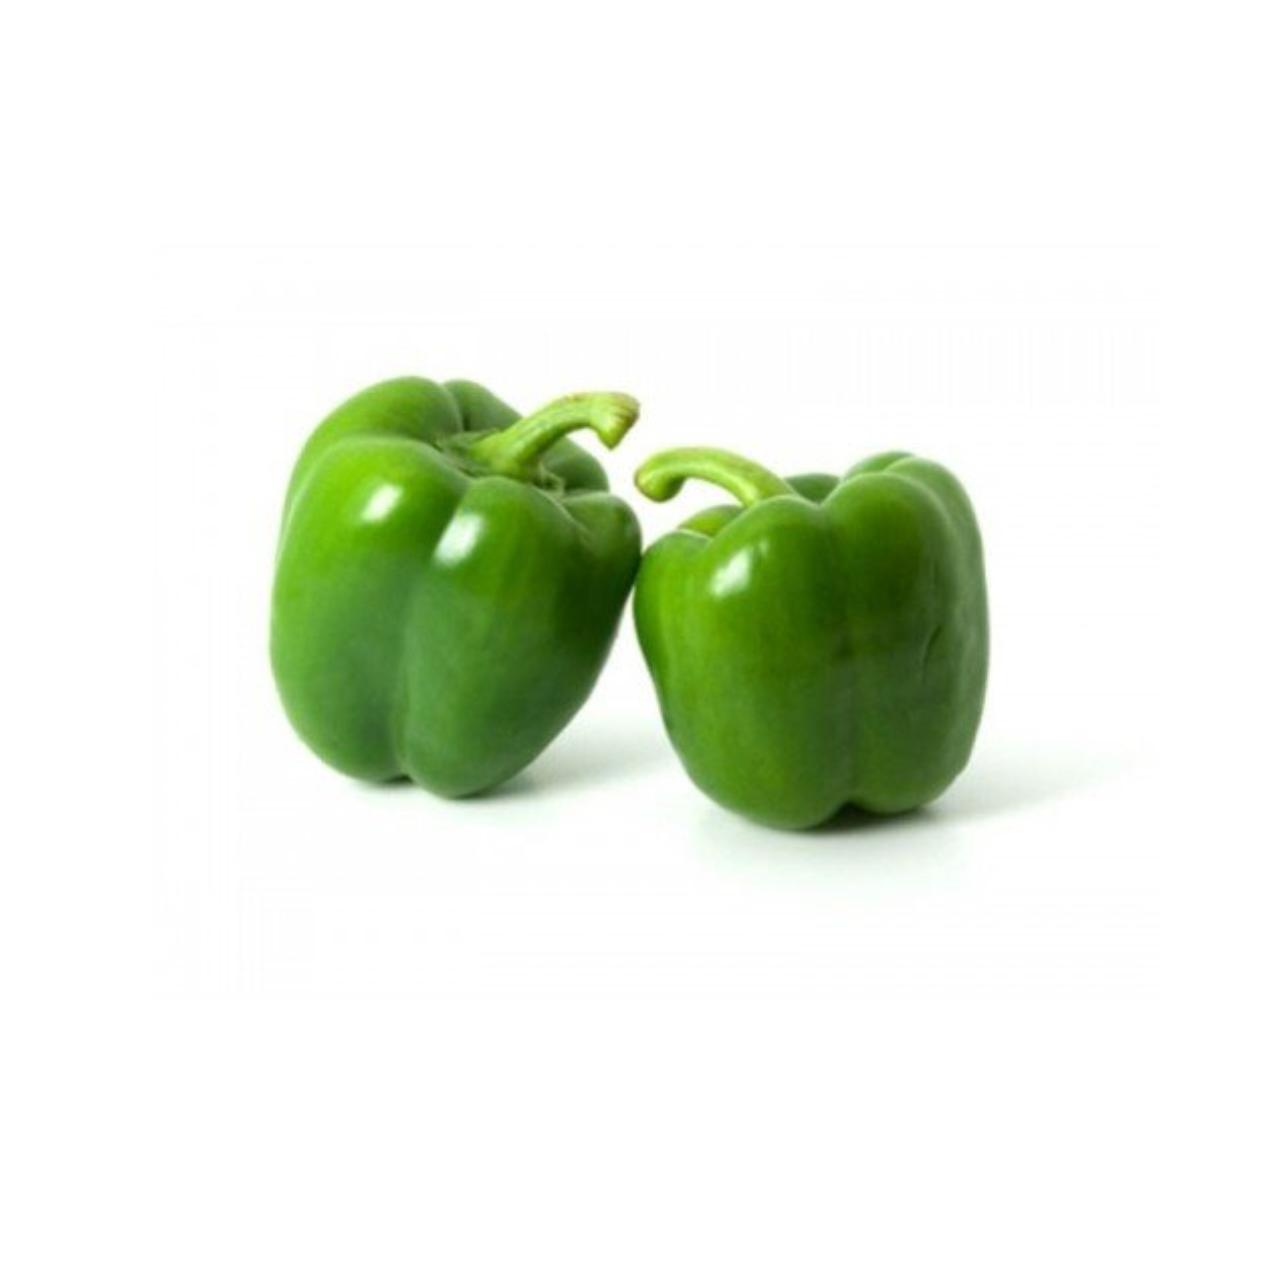 Перец болгарский зеленый 1 кг